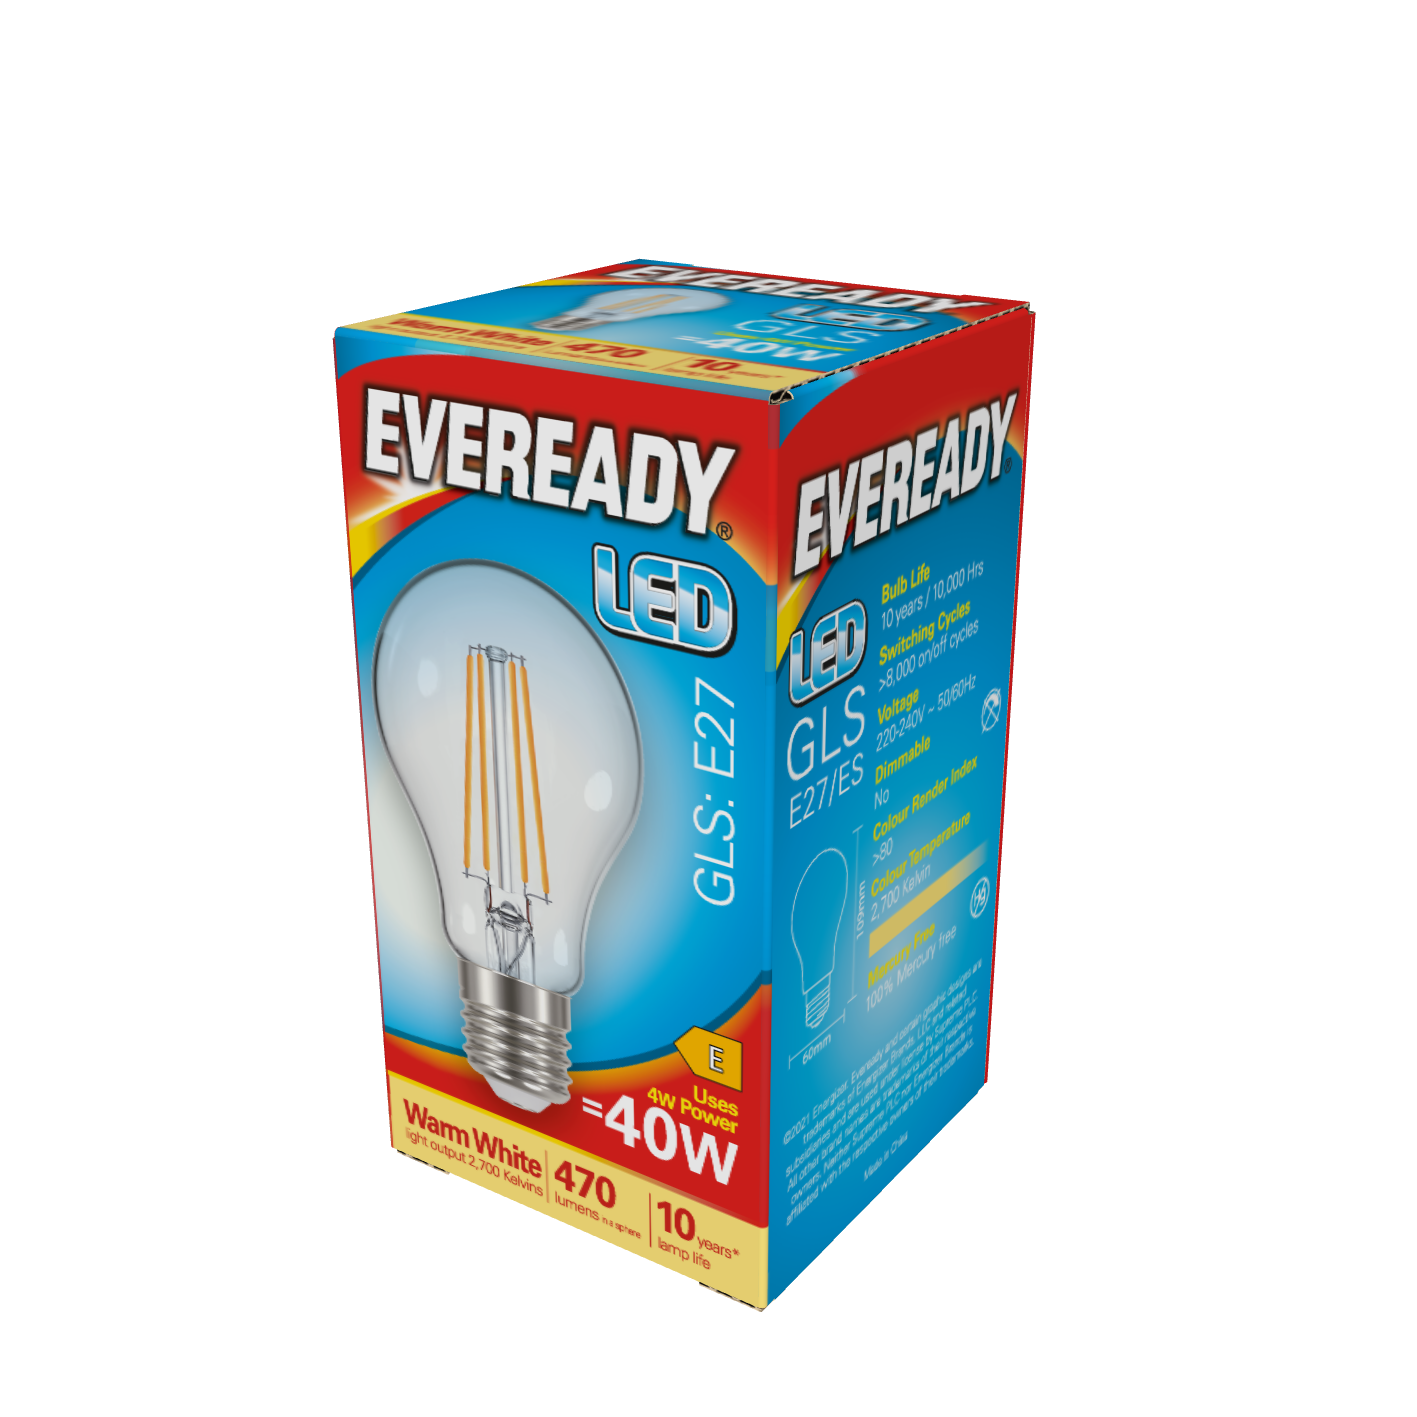 Eveready LED Filament GLS E27 (ES) 470lm 4W 2,700K (Warm White) Box of 1